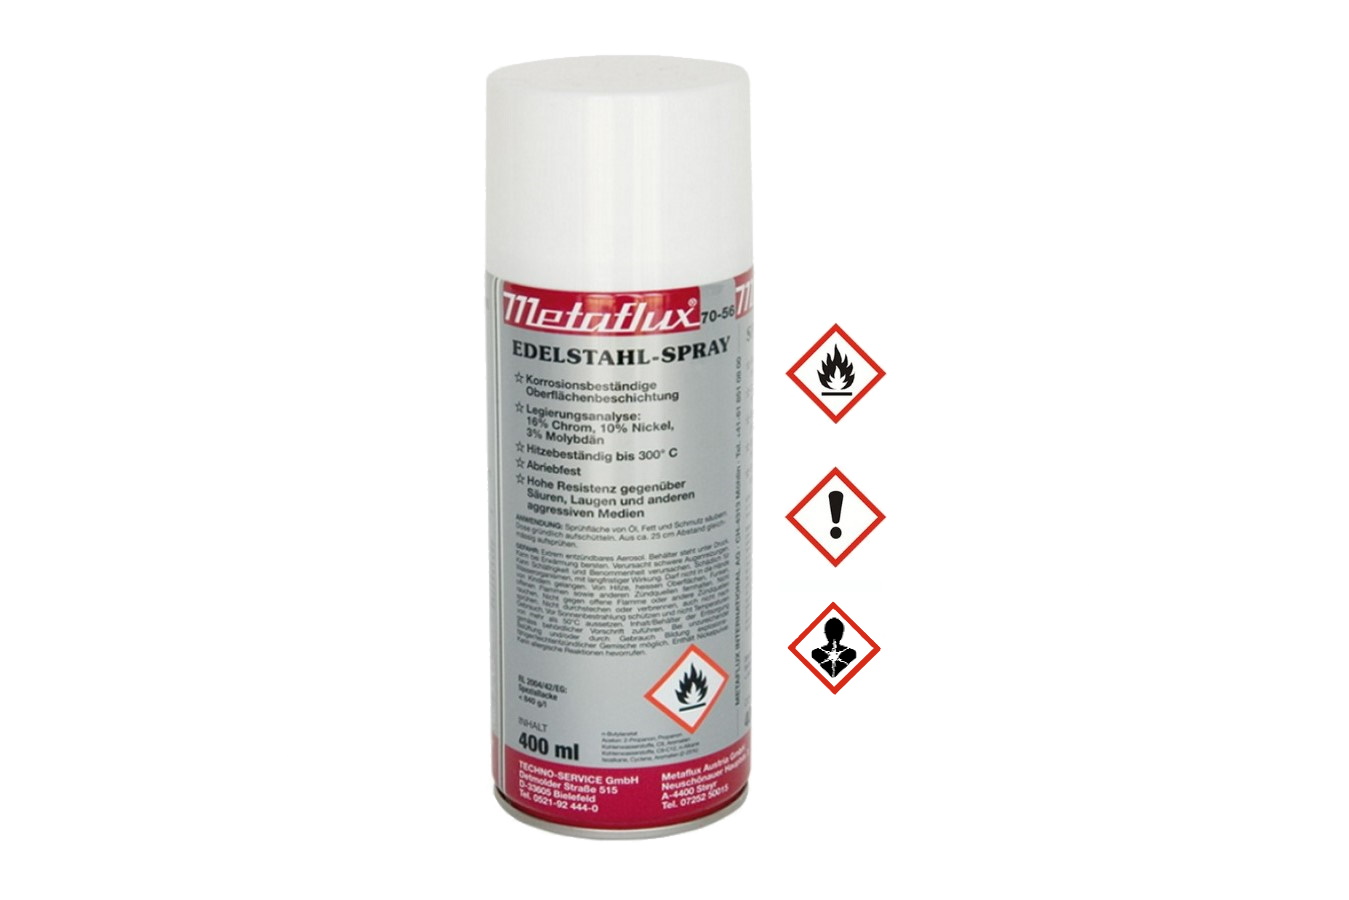 Edelstahl-Spray 400ml Metaflux | 70-5600 - 1